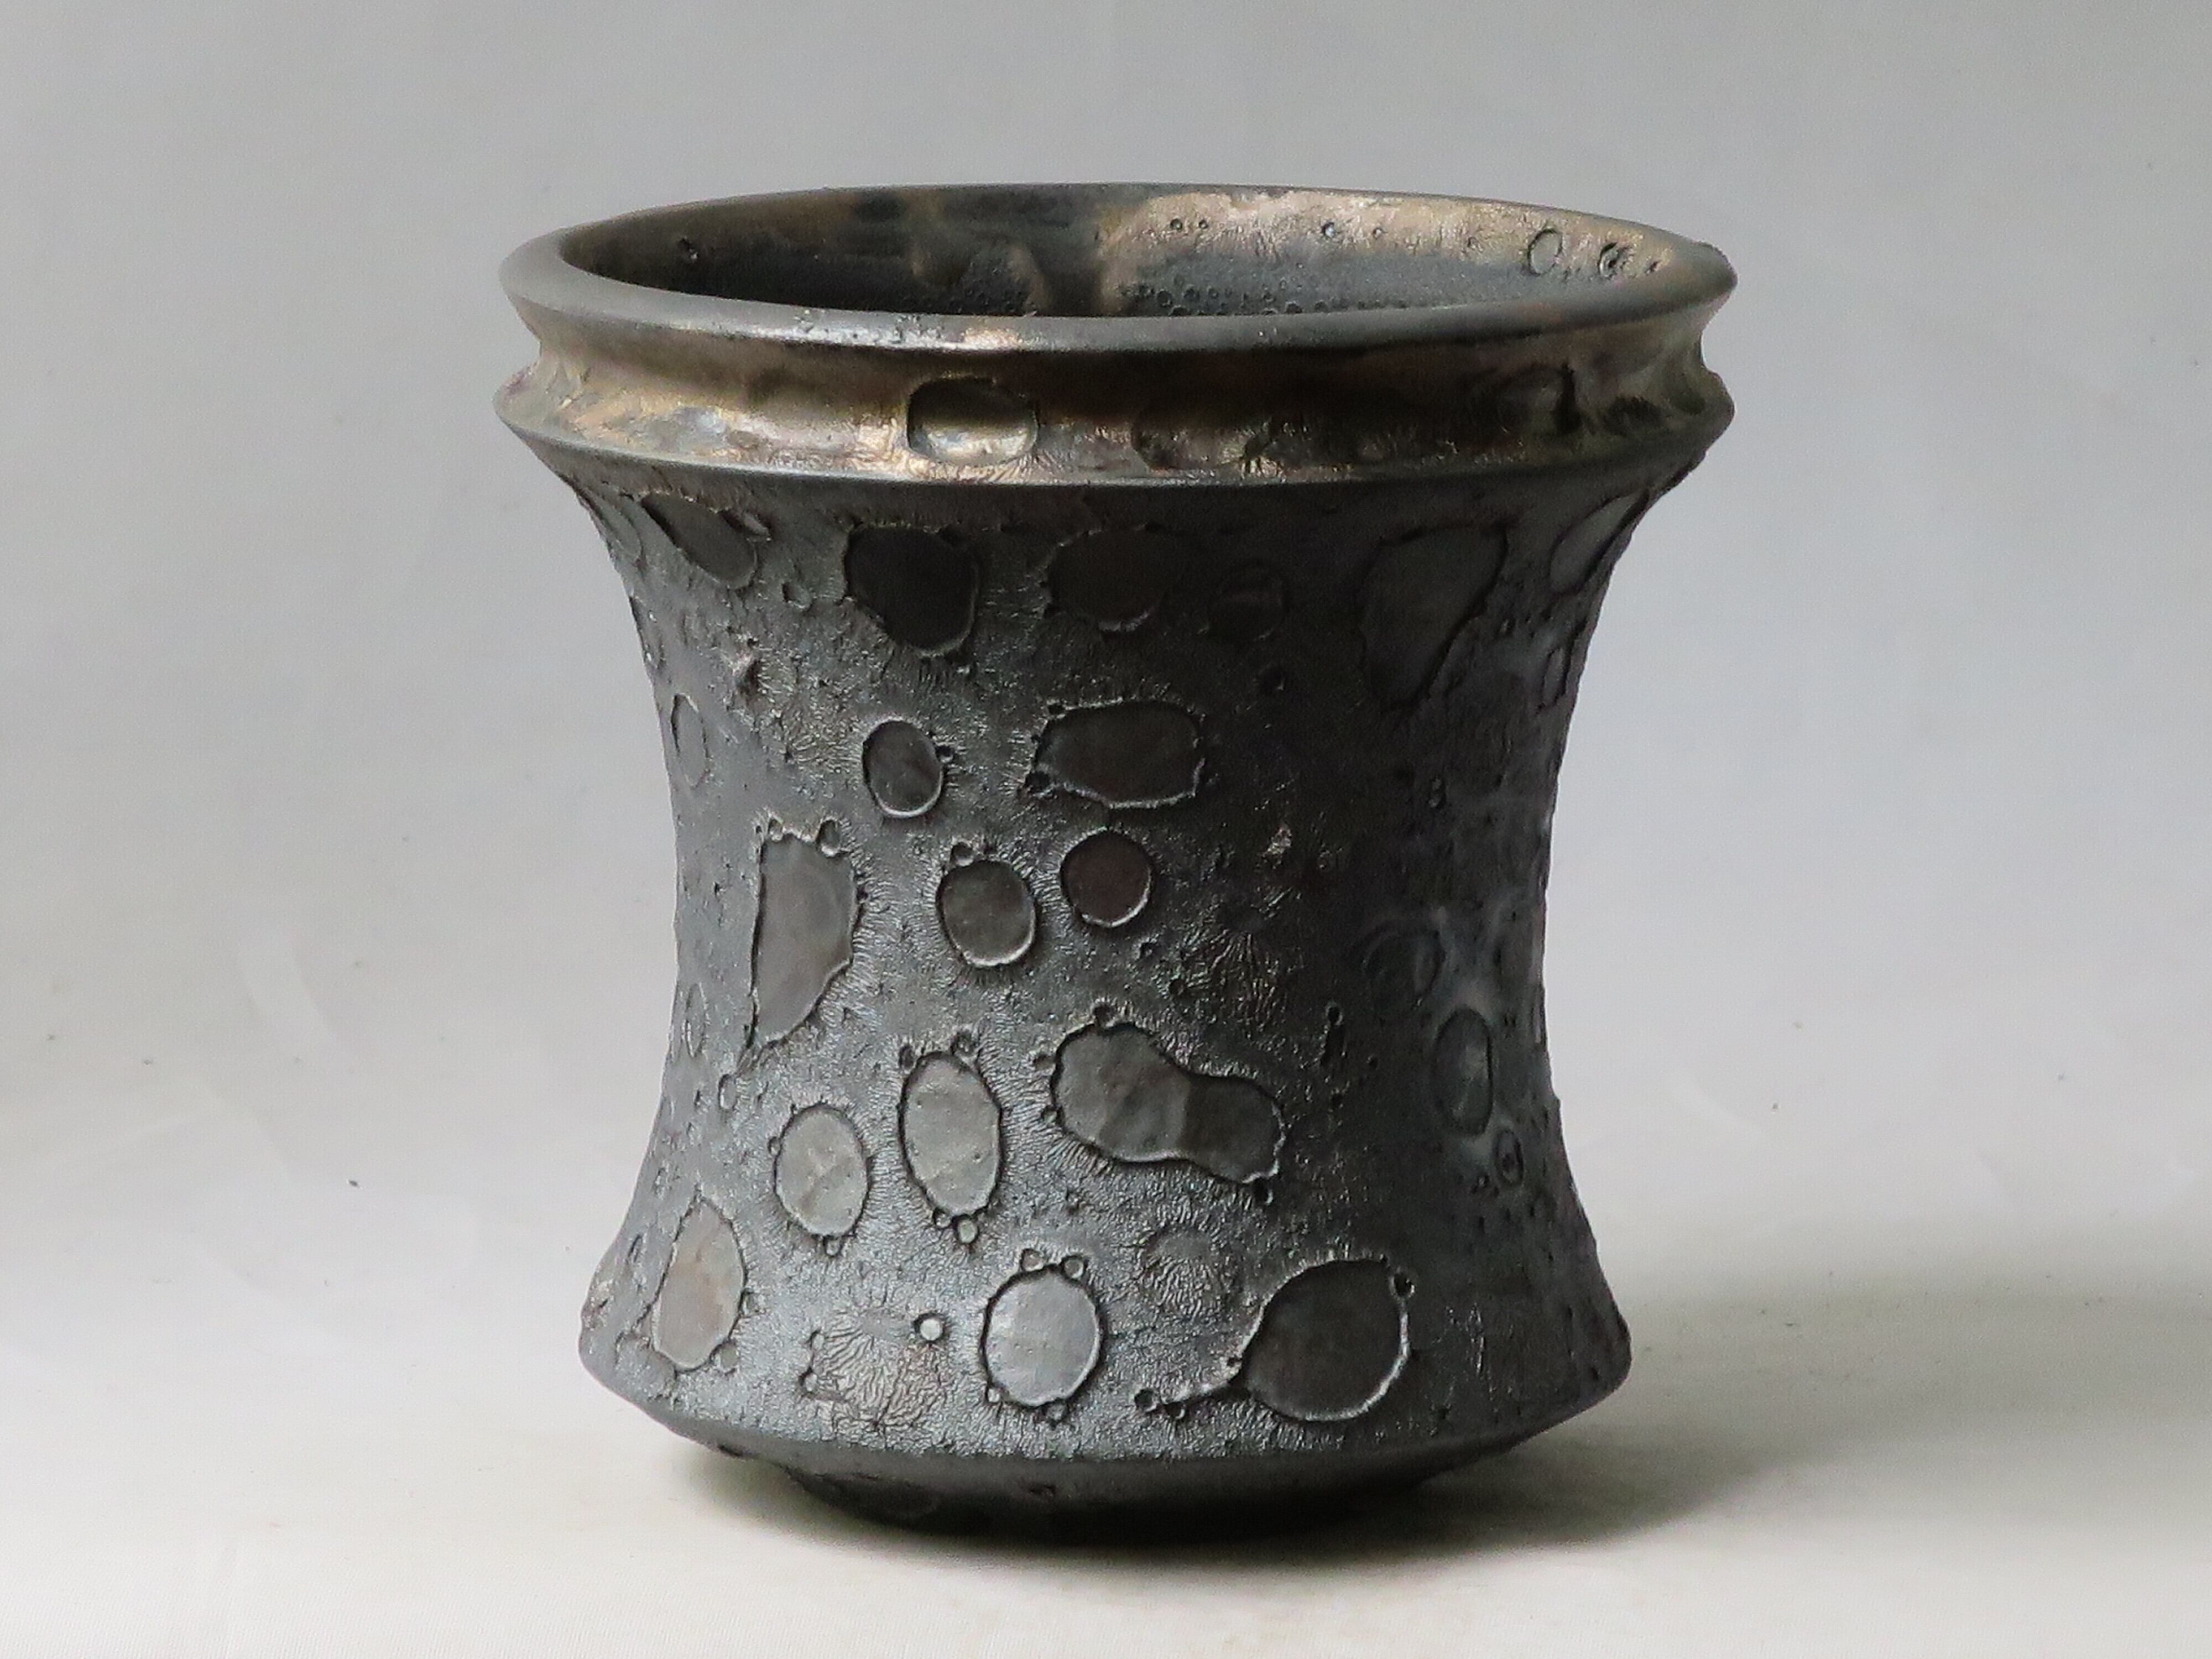 usagi ceramic laboratory 作家鉢 陶器鉢 #2 - 花瓶